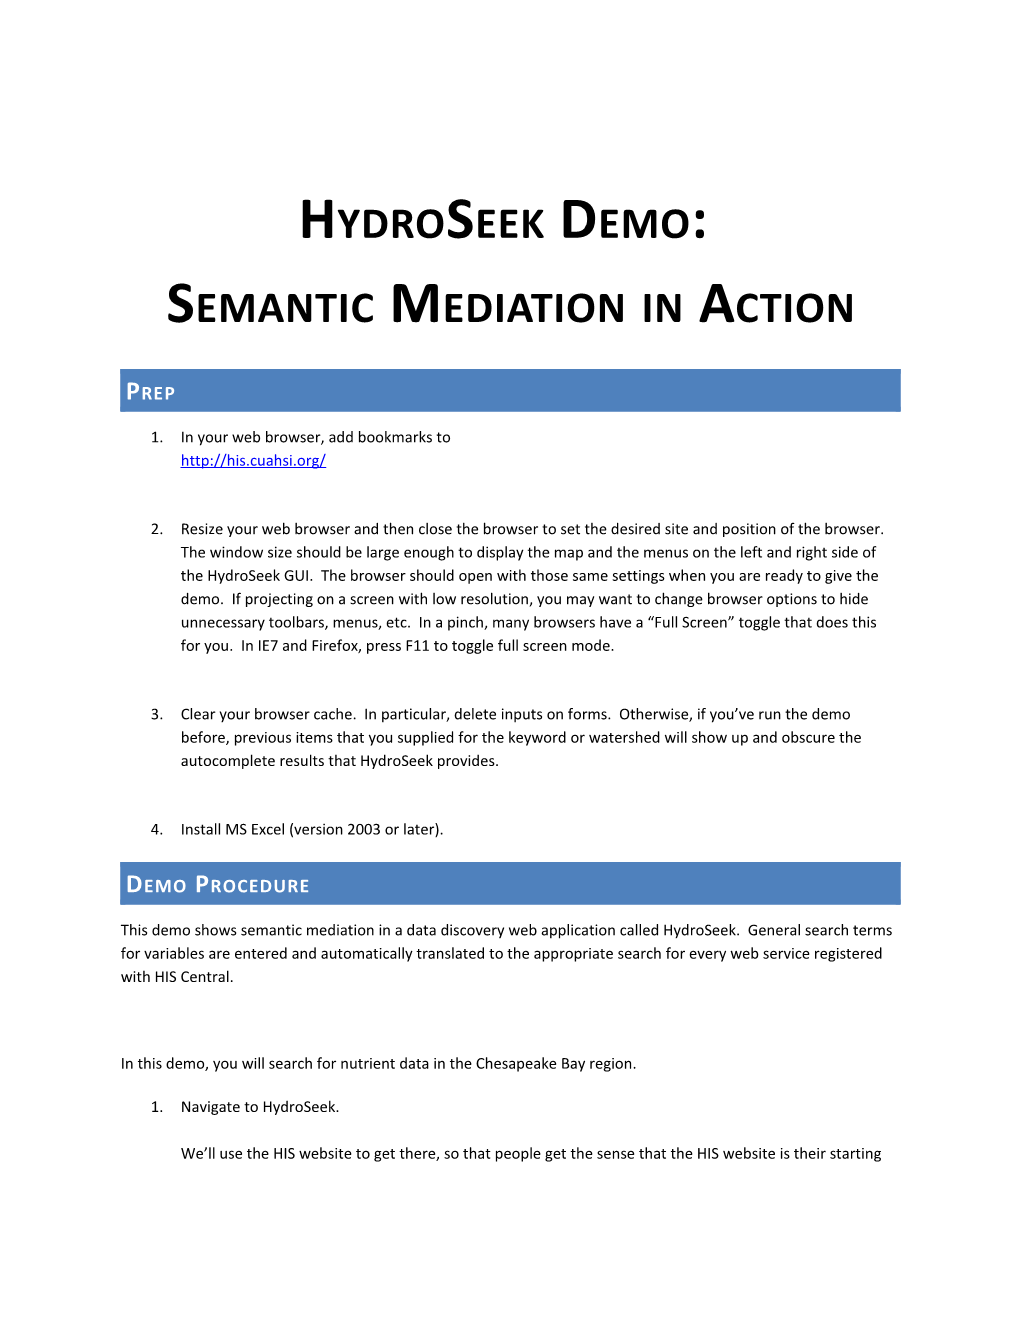 Hydroseek Demo: Semantic Mediation in Action